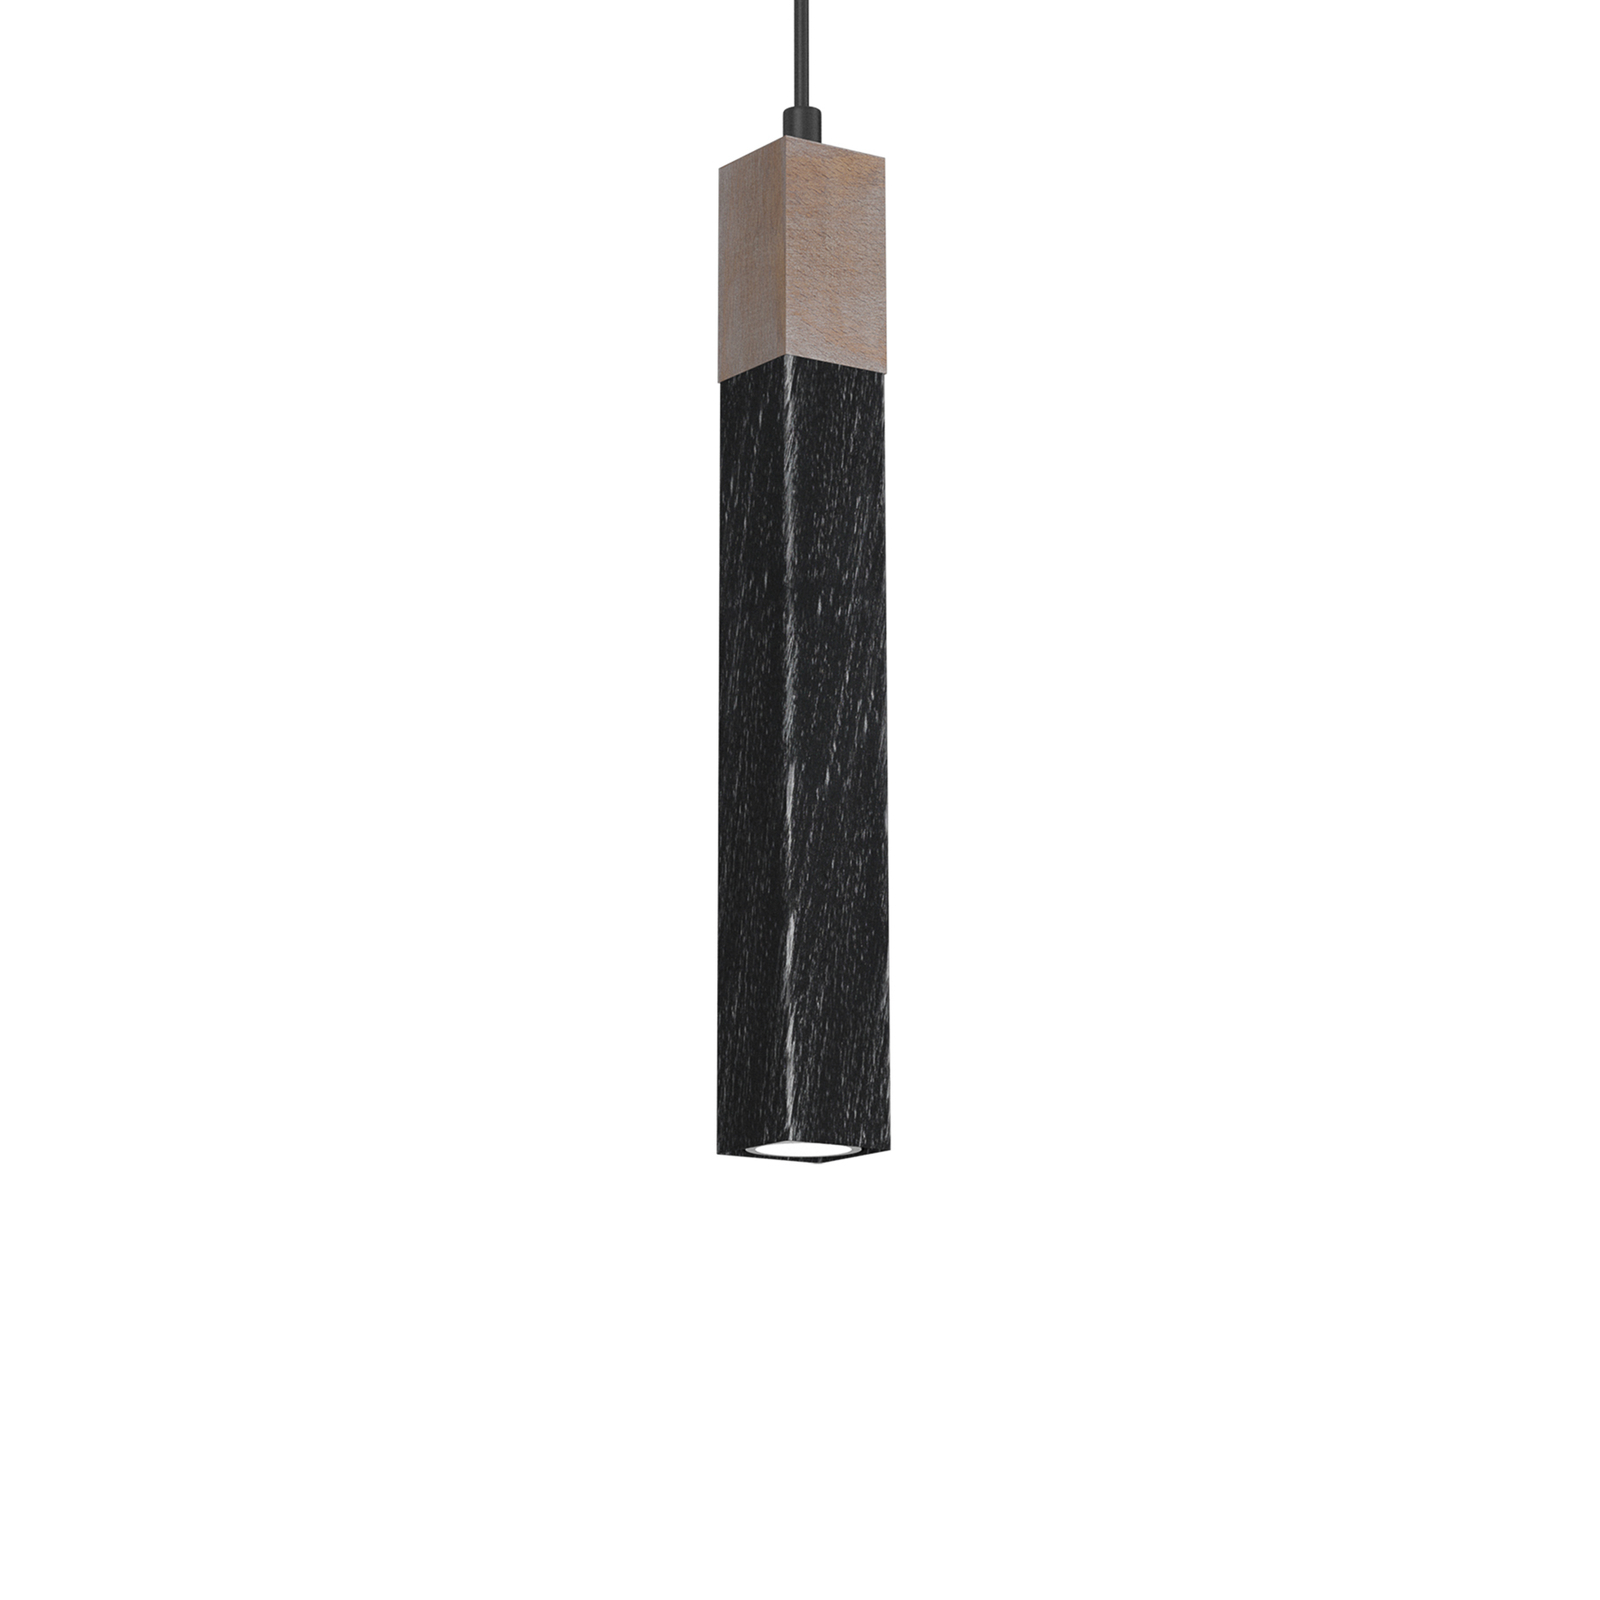 Függő lámpa Stag egy-ágú fekete/barna